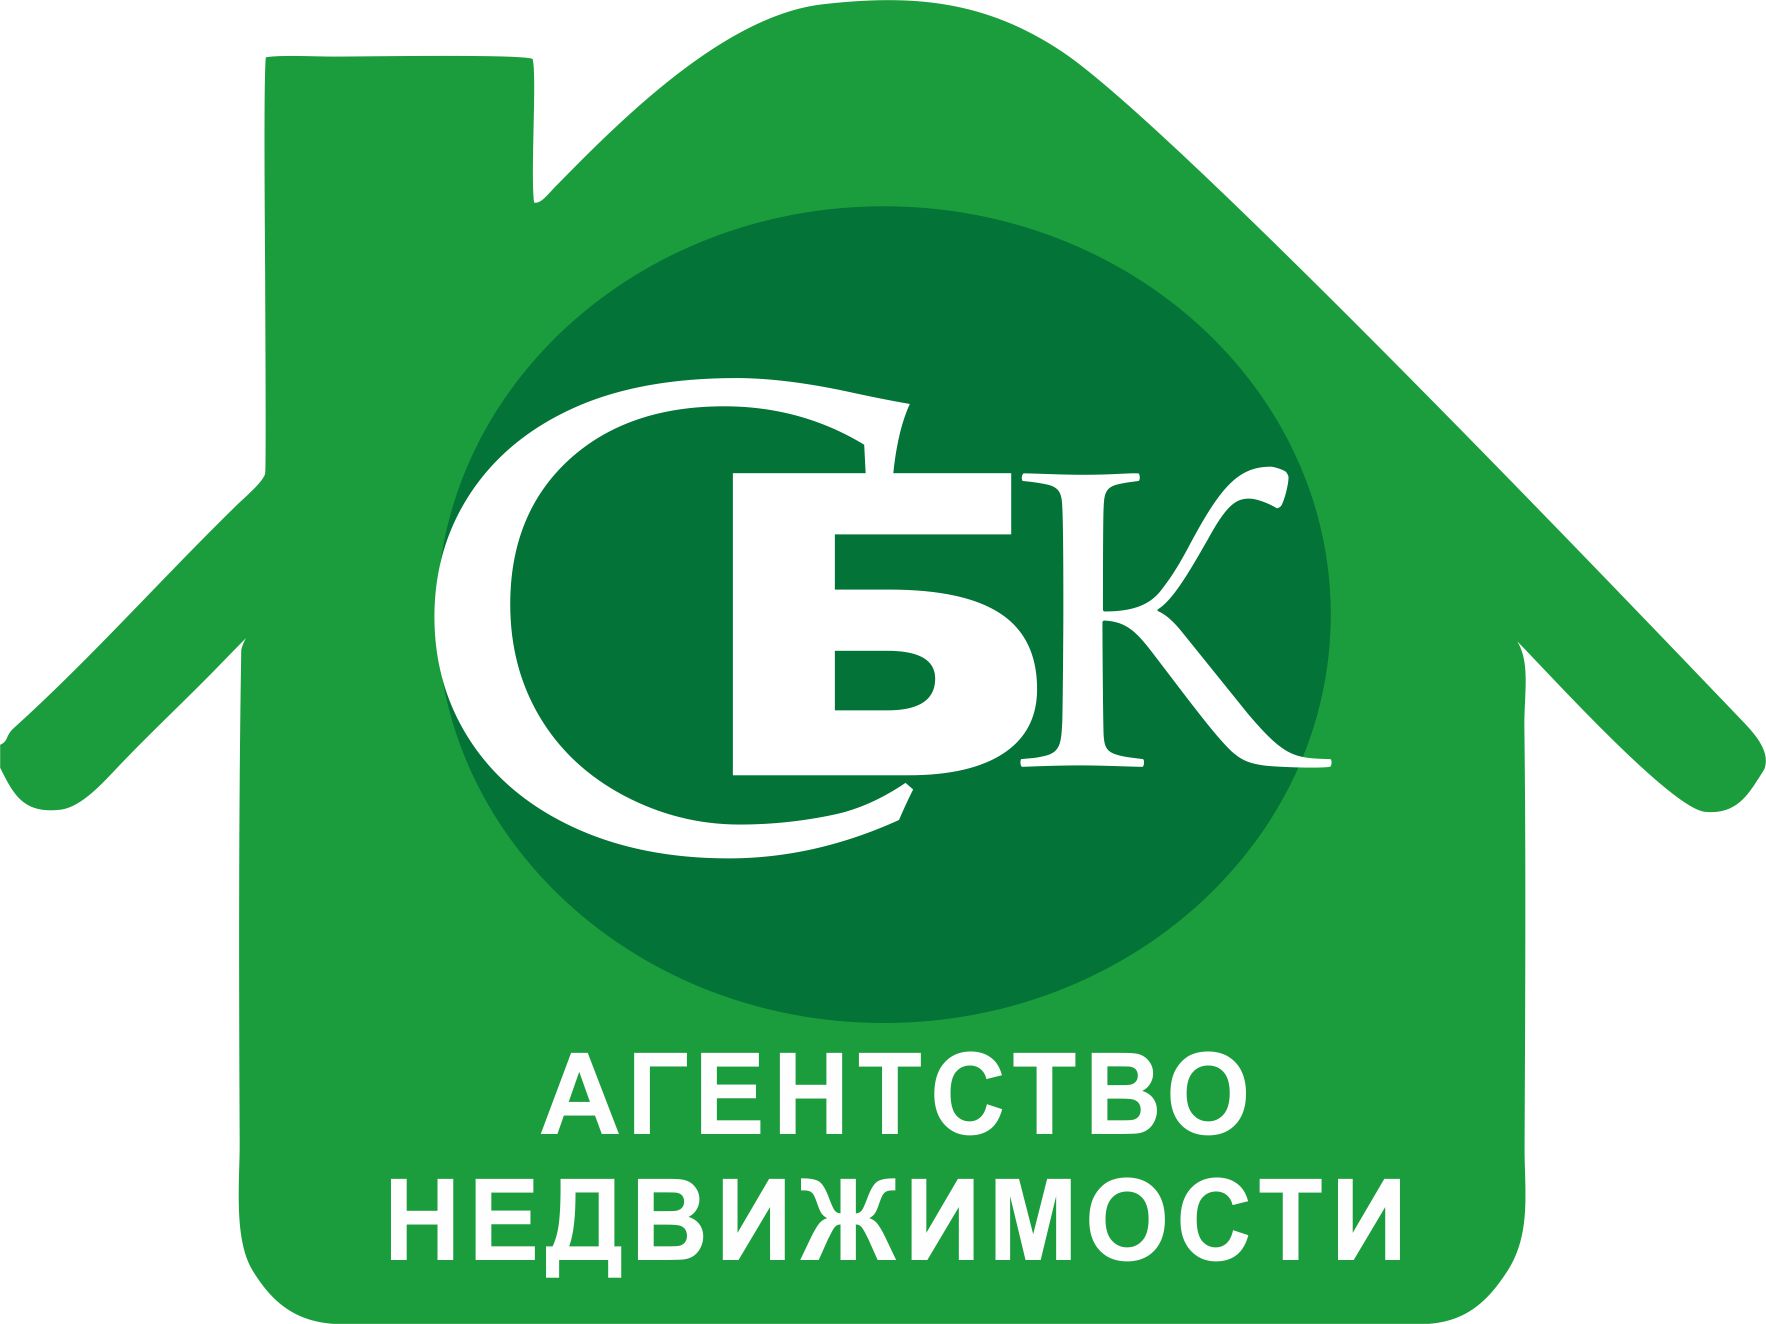 Вода ооо центр сбк. СБК логотип. Агентство недвижимости Новосибирск. Агенство недвижимости. Логотипы агентств недвижимости Новосибирска.